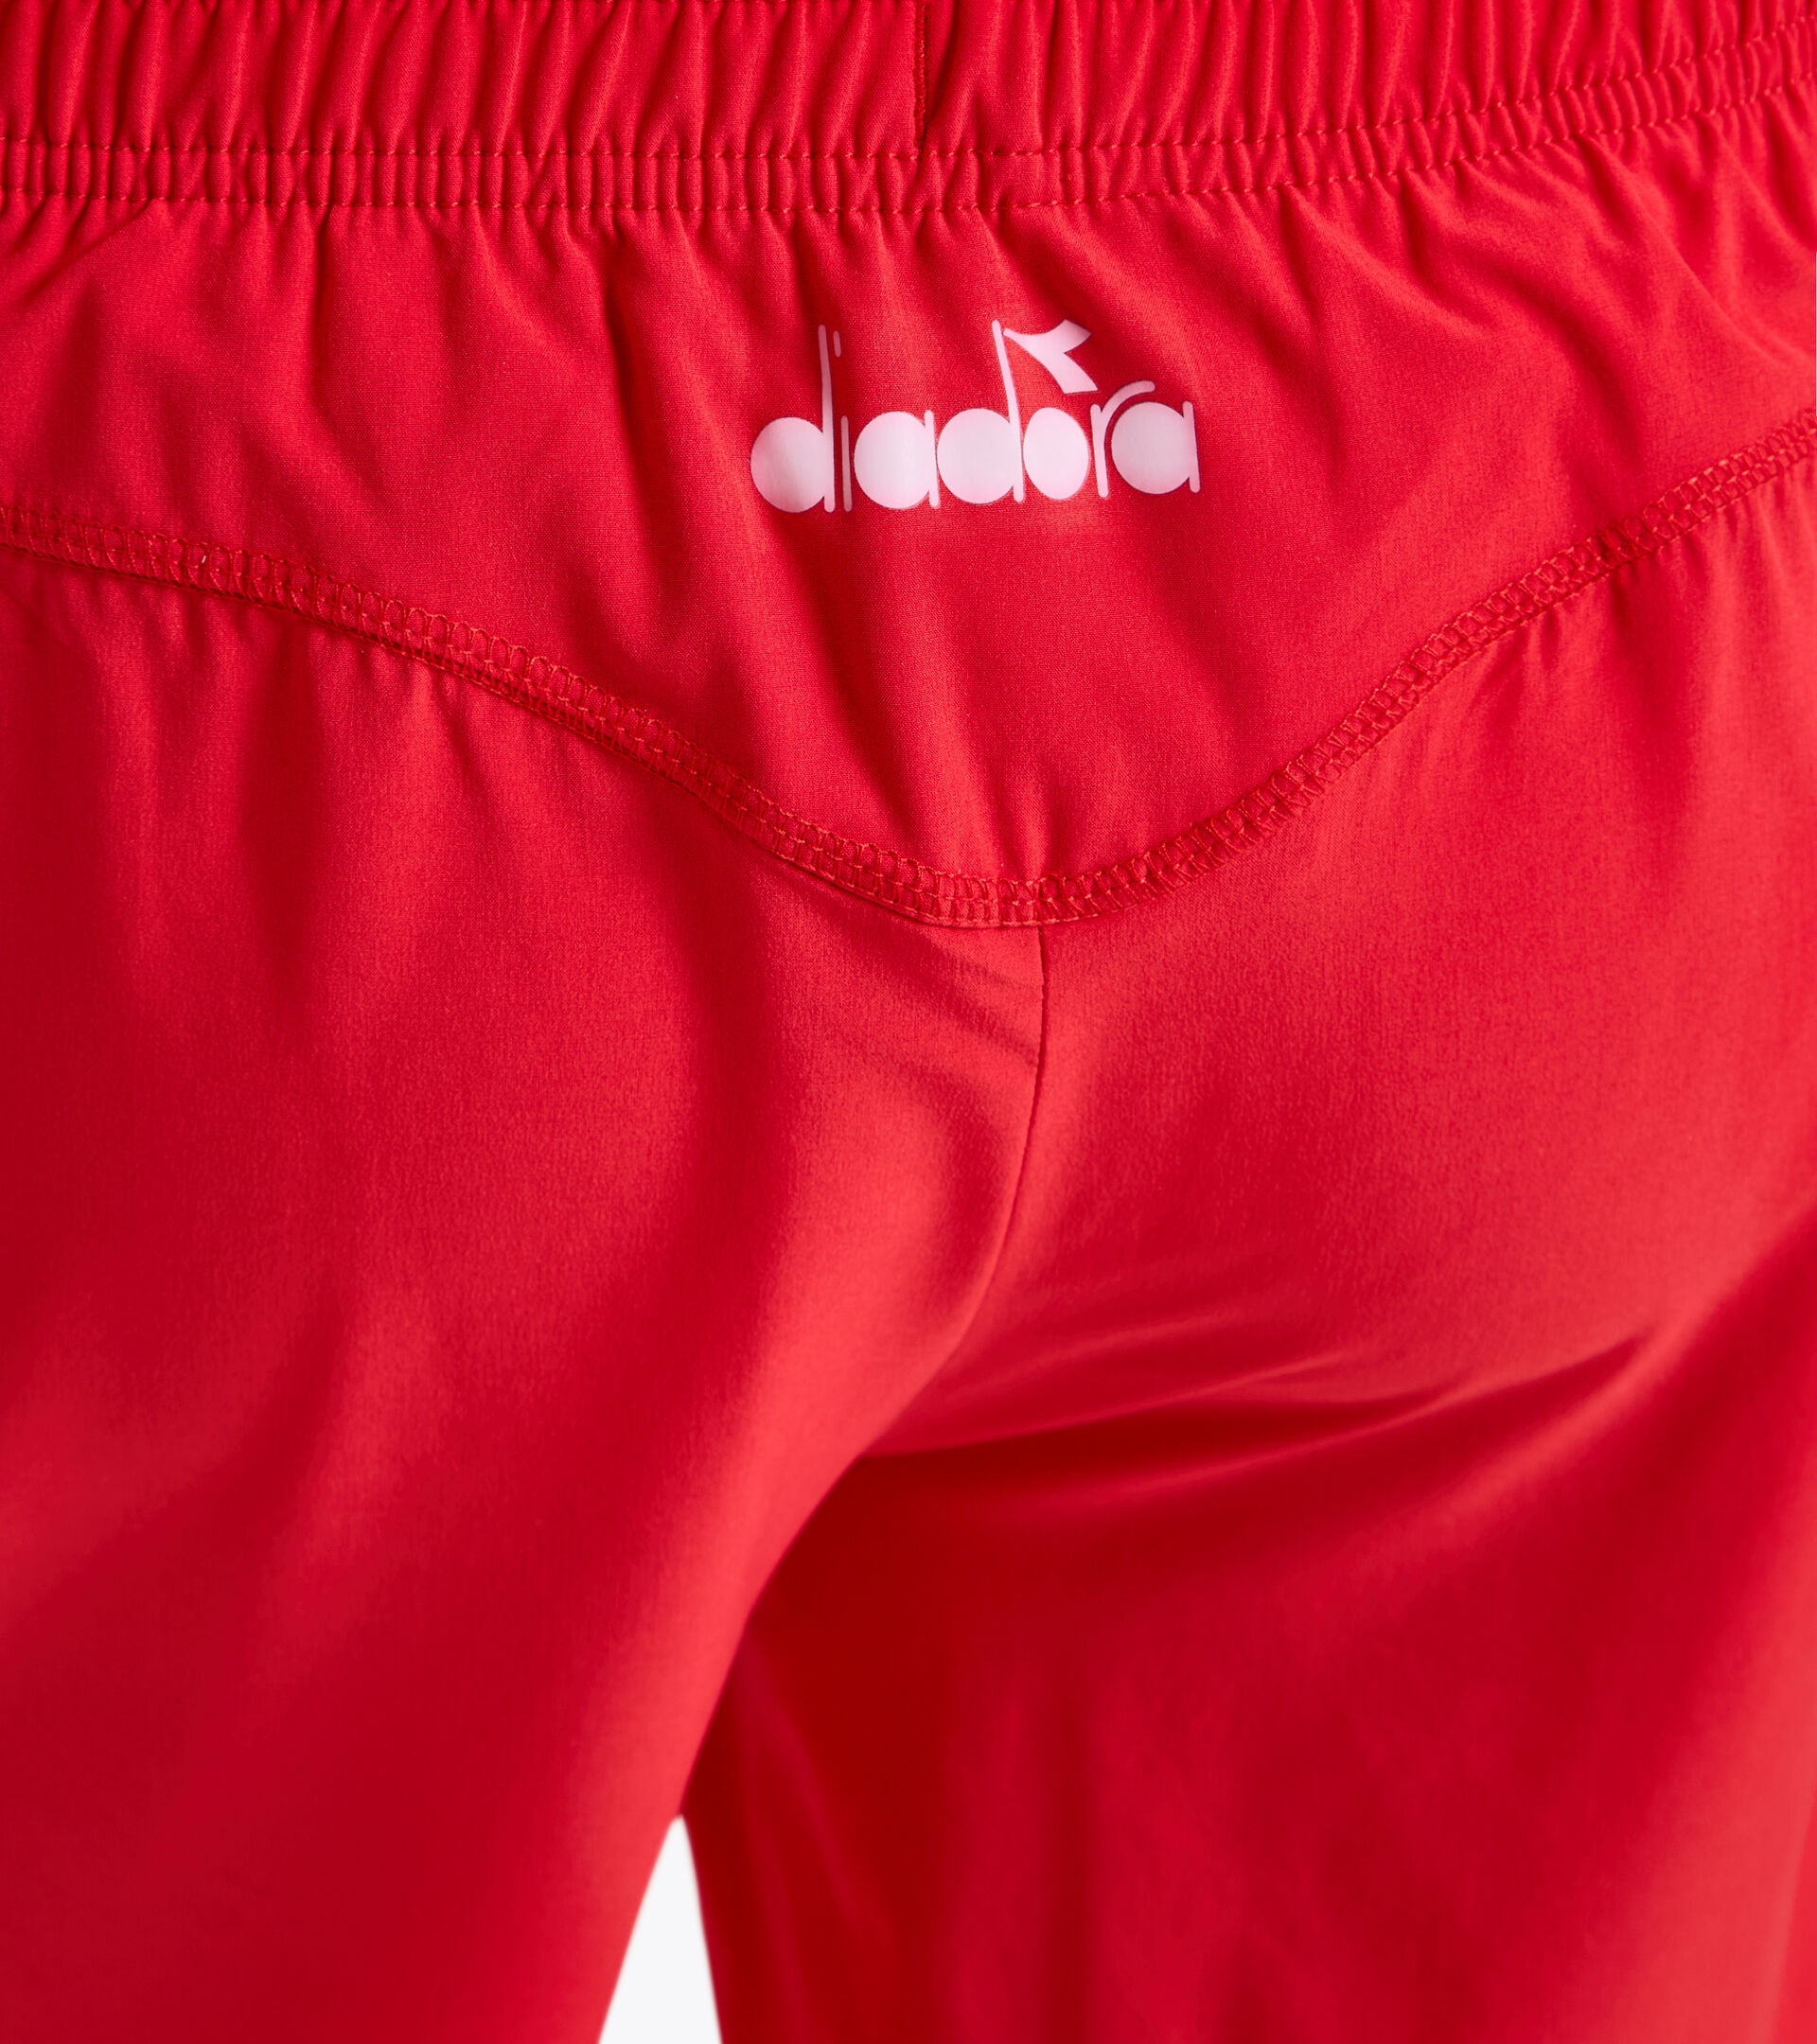 Tennis bermuda shorts - Men SHORT COURT TOMATO RED - Diadora